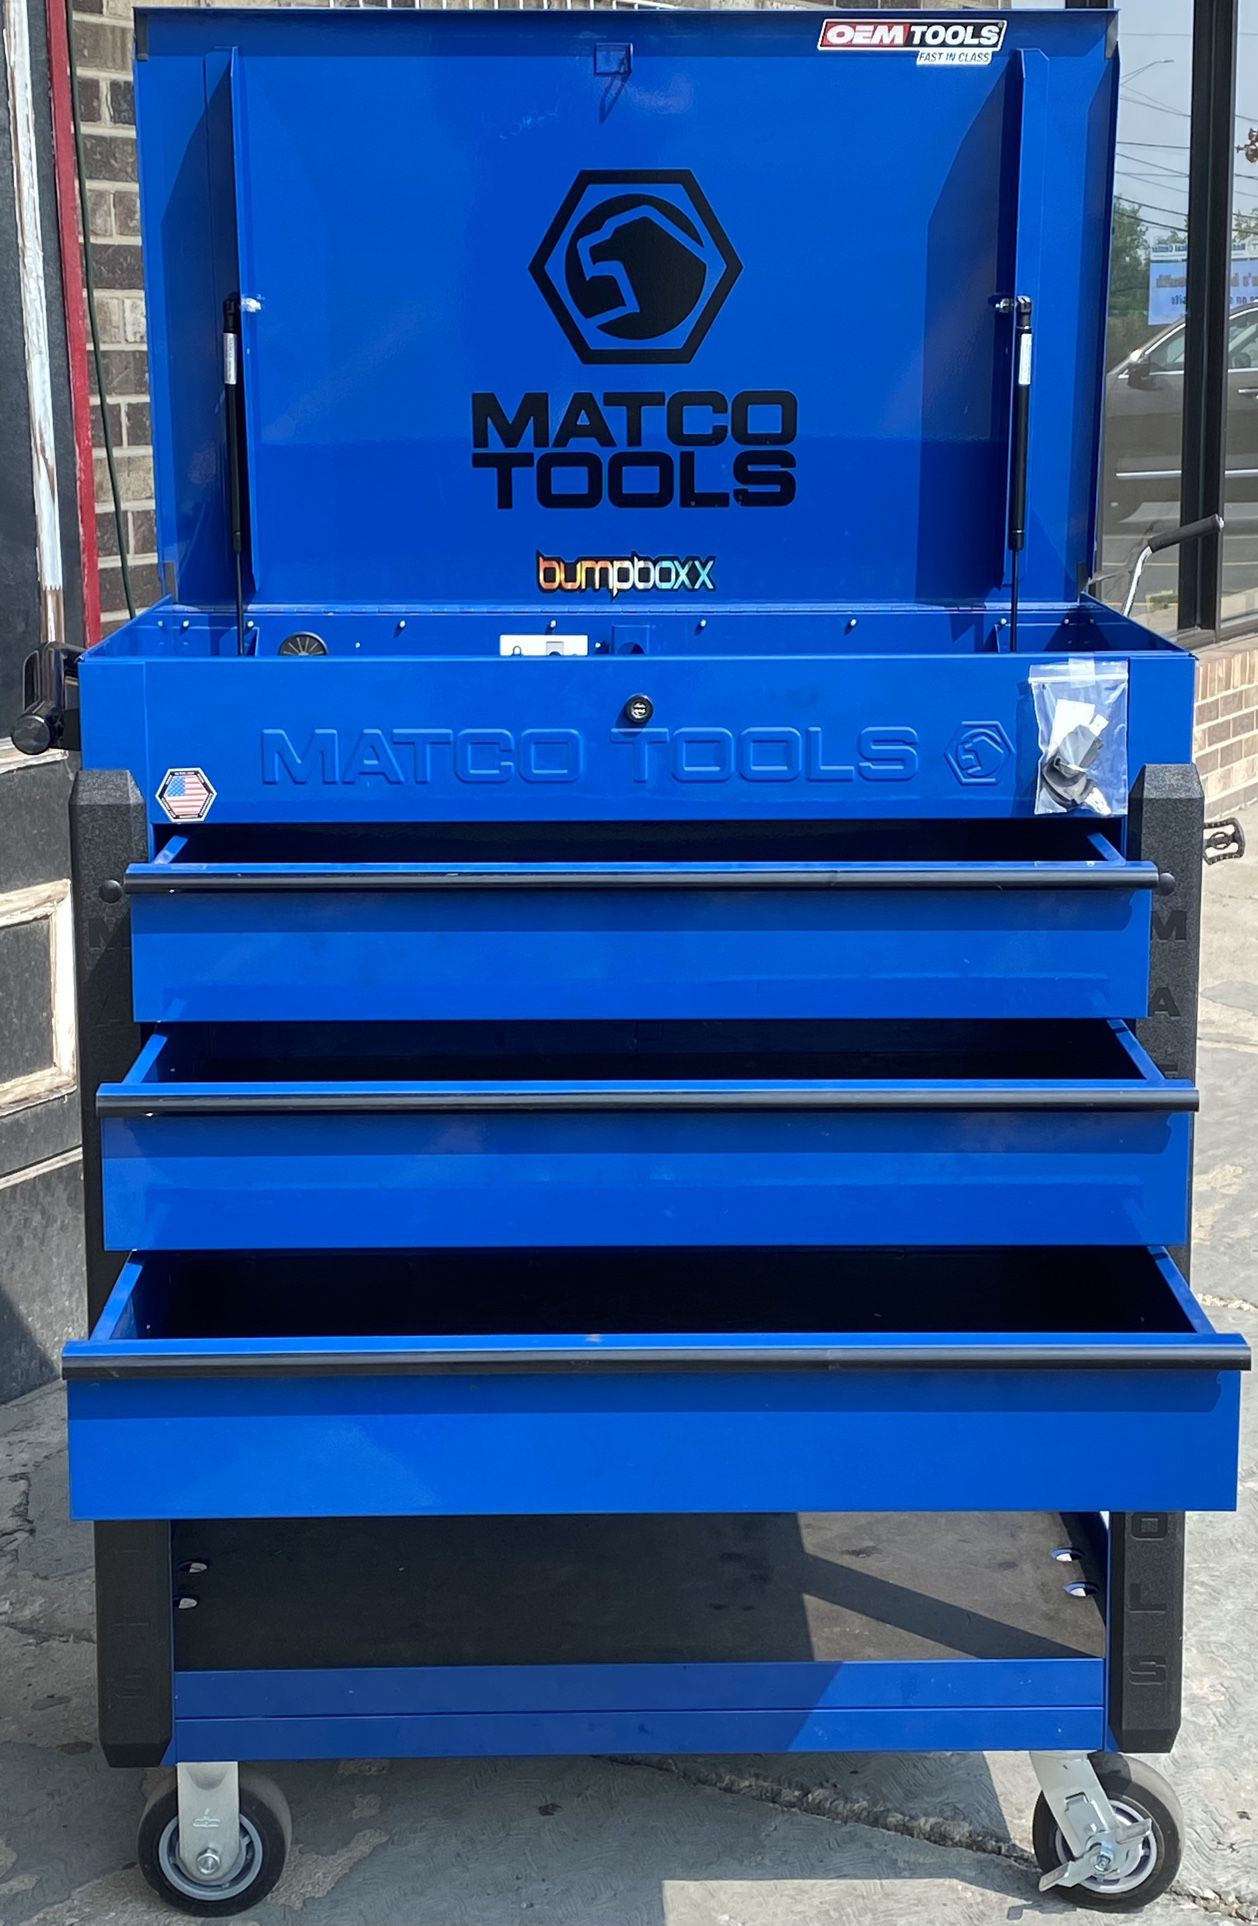 Matco JSC453 Rolling Toolbox Tool Chest w/Keys - Blue